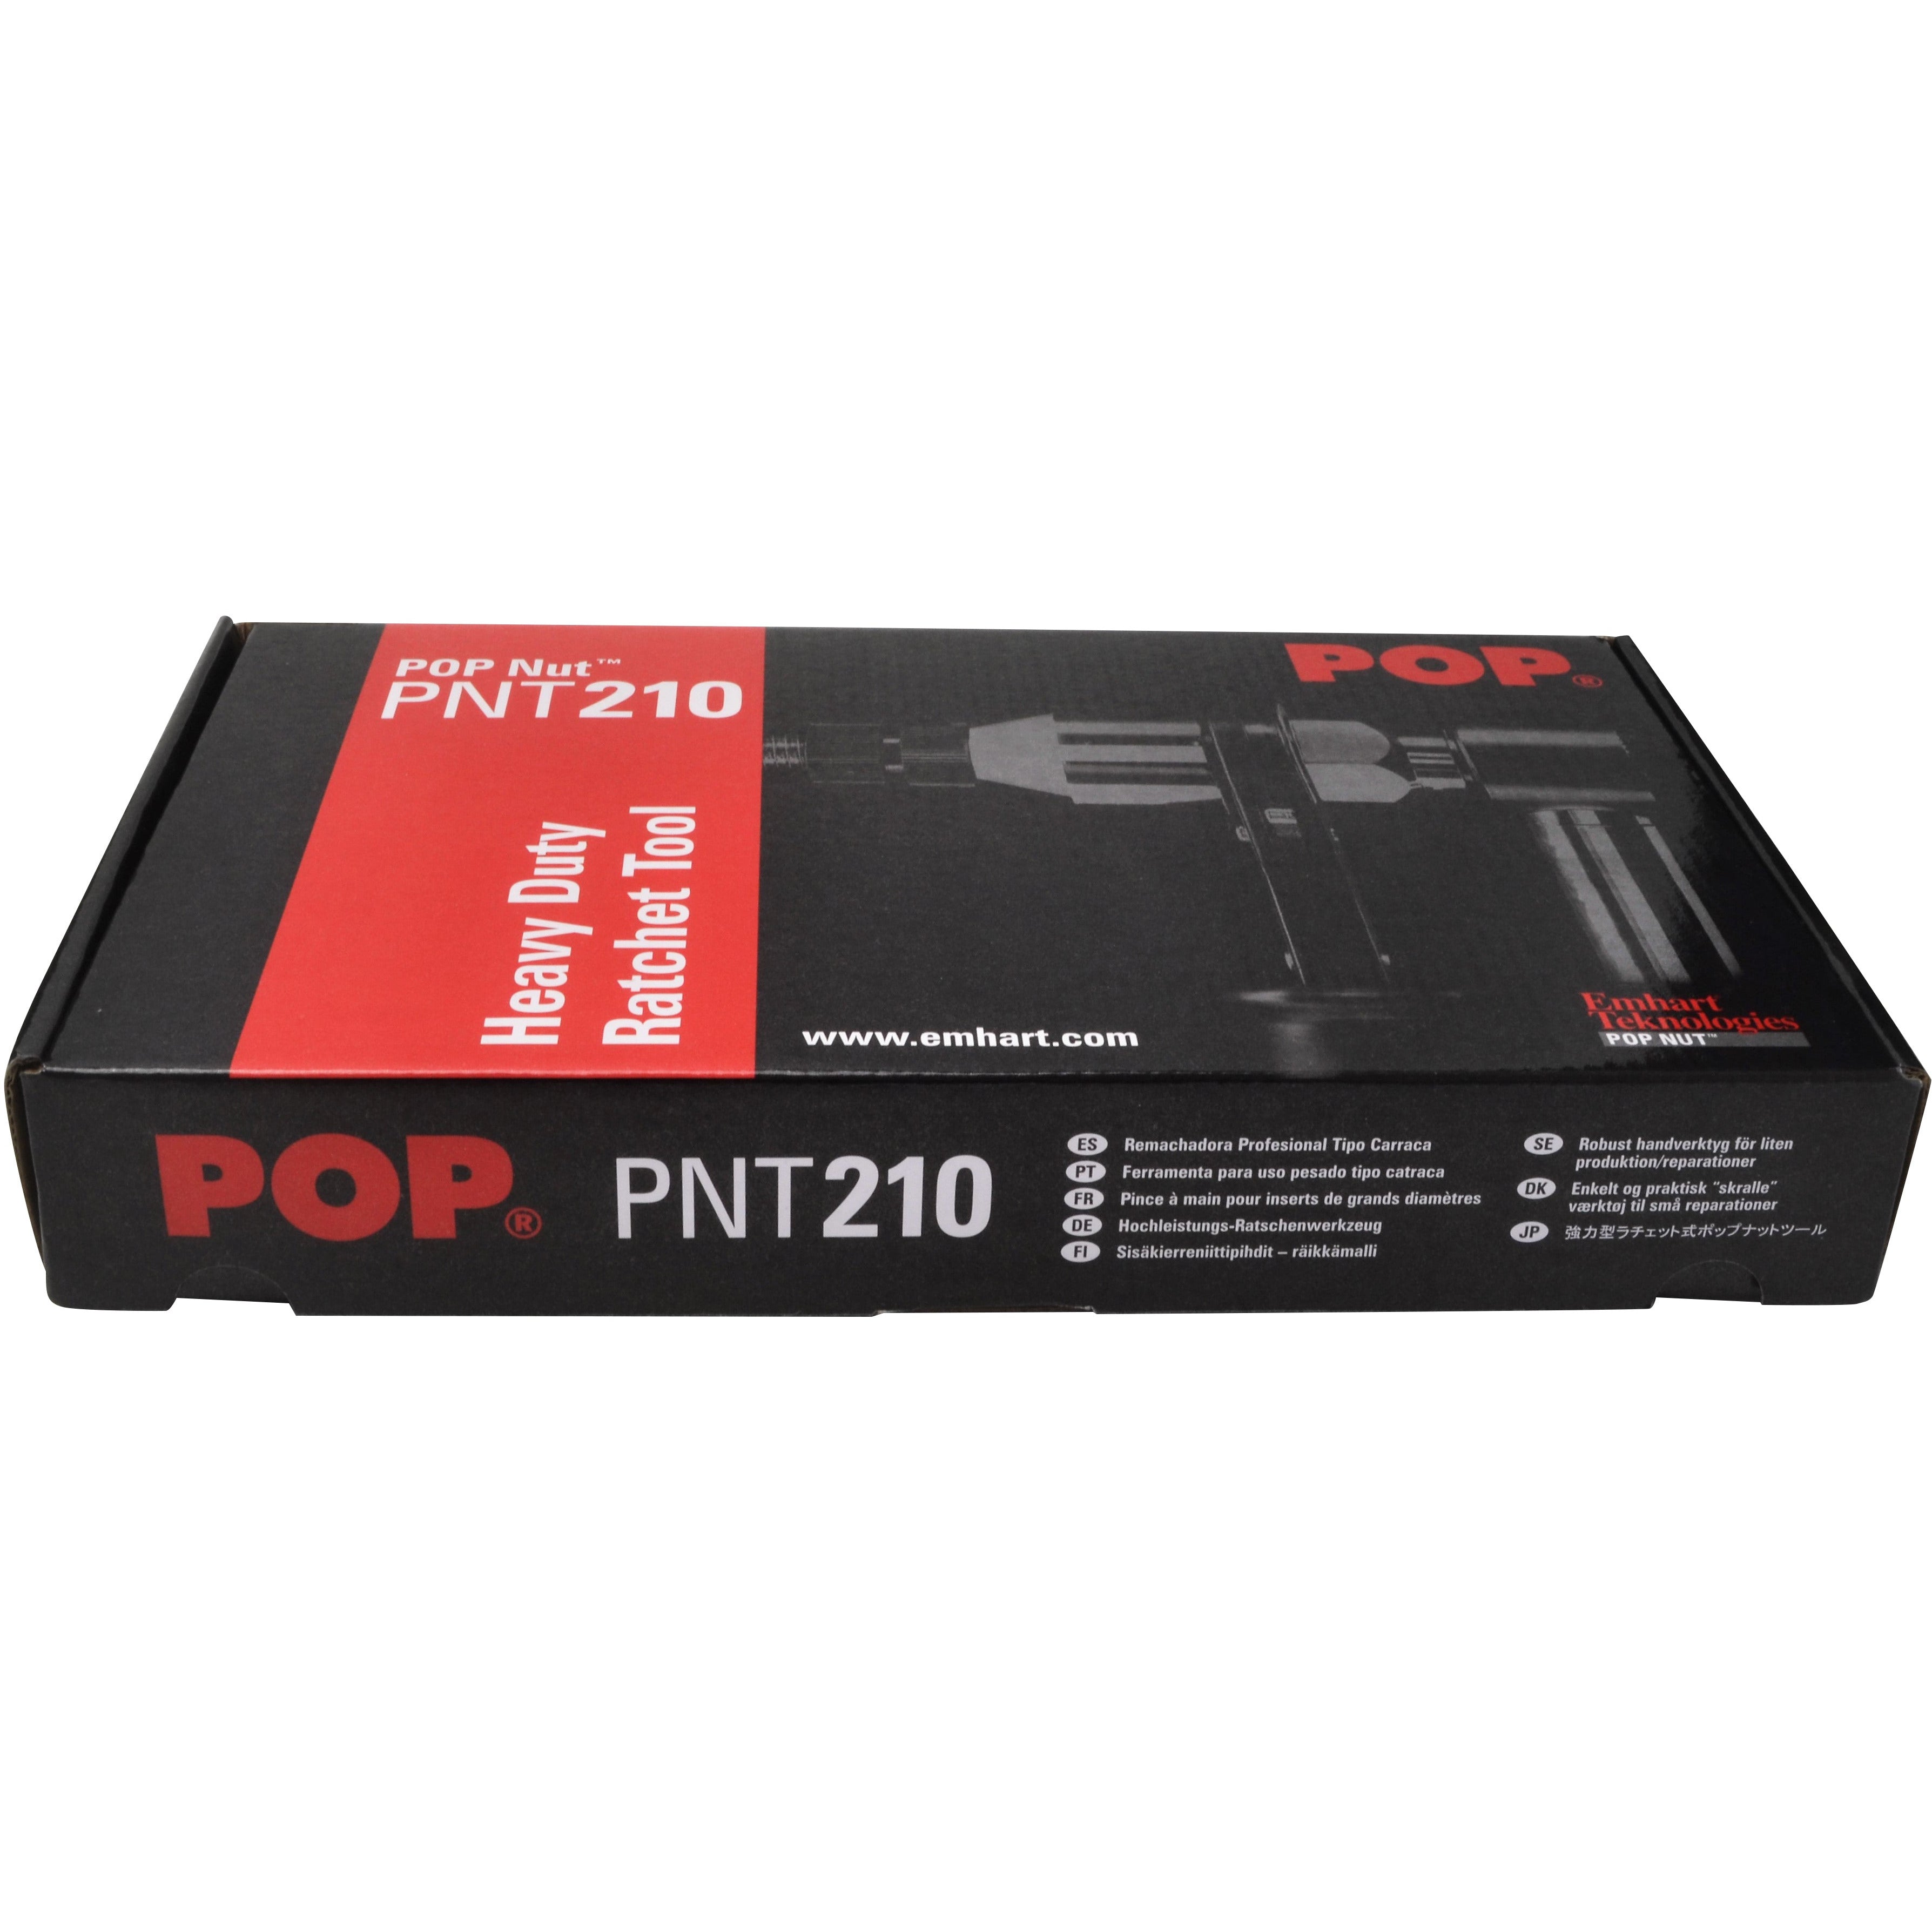 Nutsert PNT-210 POP® Rivnut Ratchet Tool M6-M12